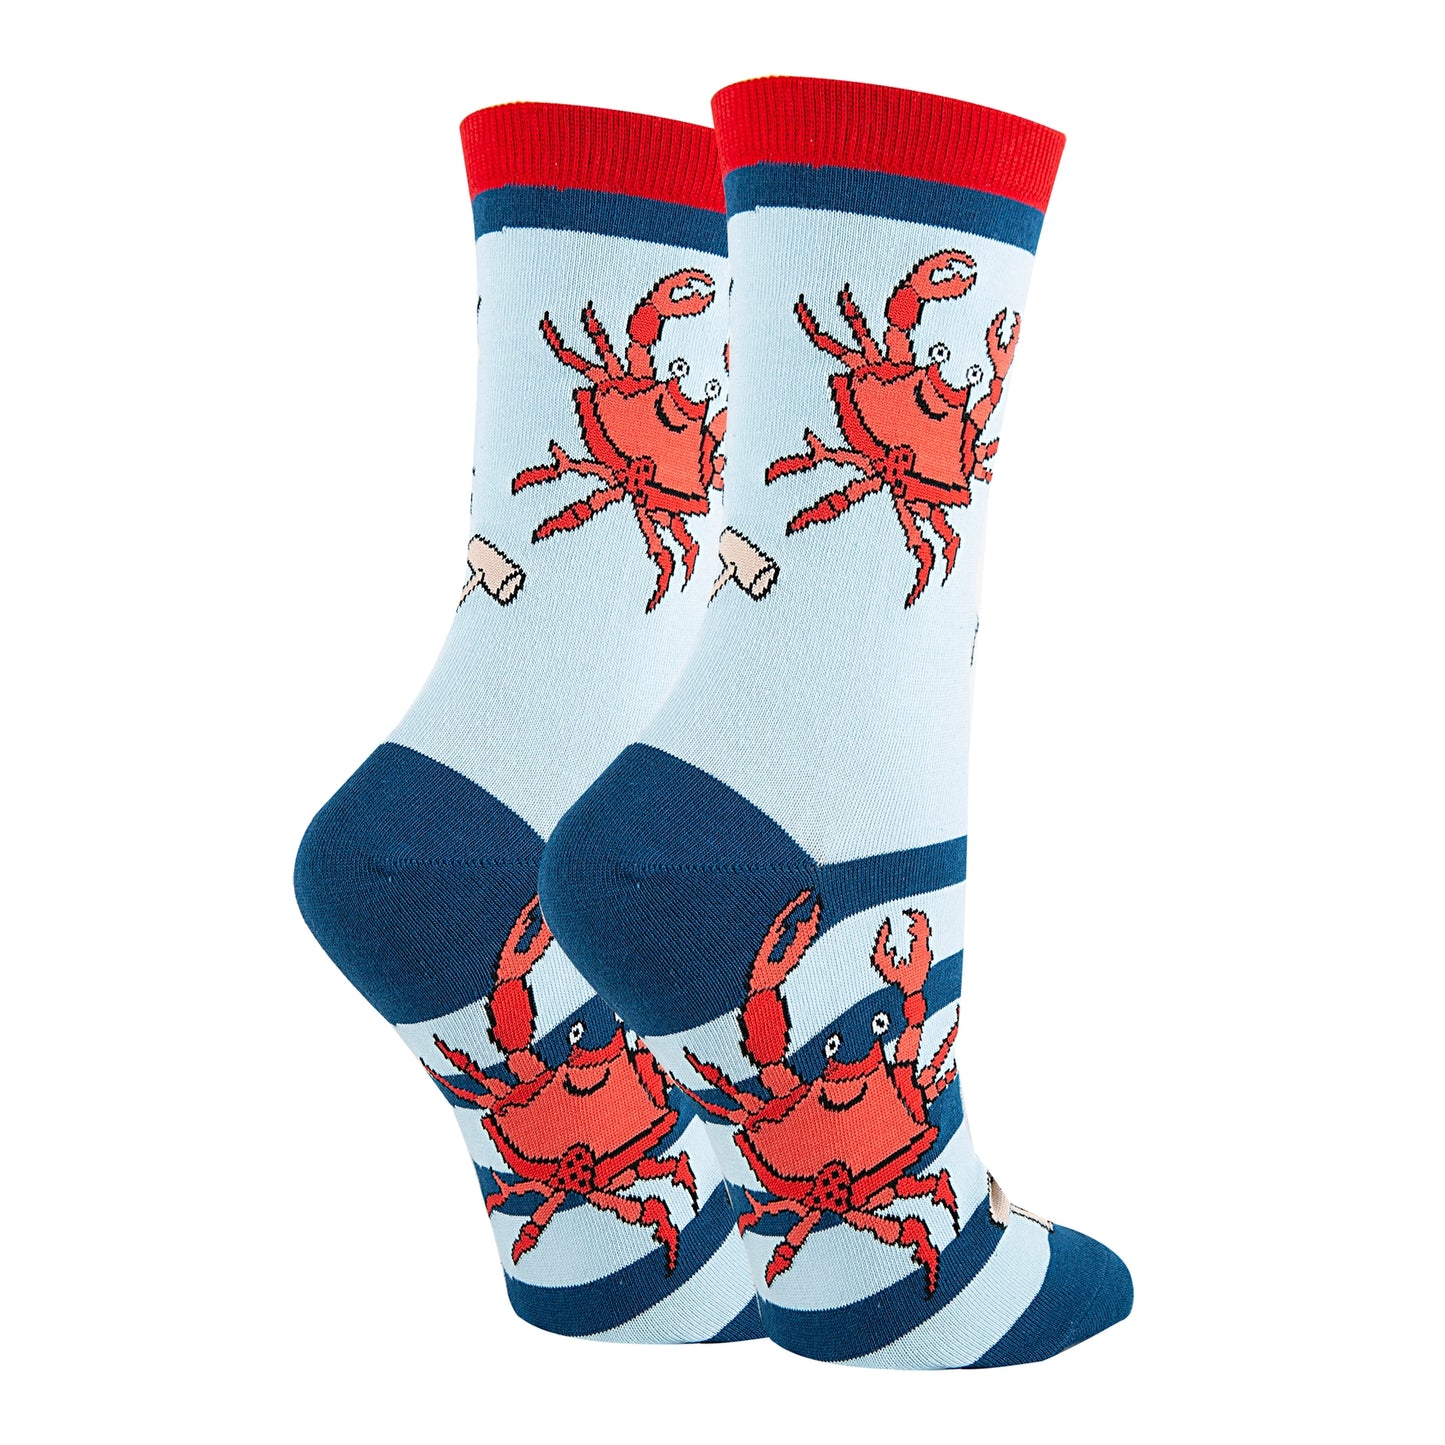 Oooh Yeah Socks - Crab Eating Socks | Women's Funny Crew Socks